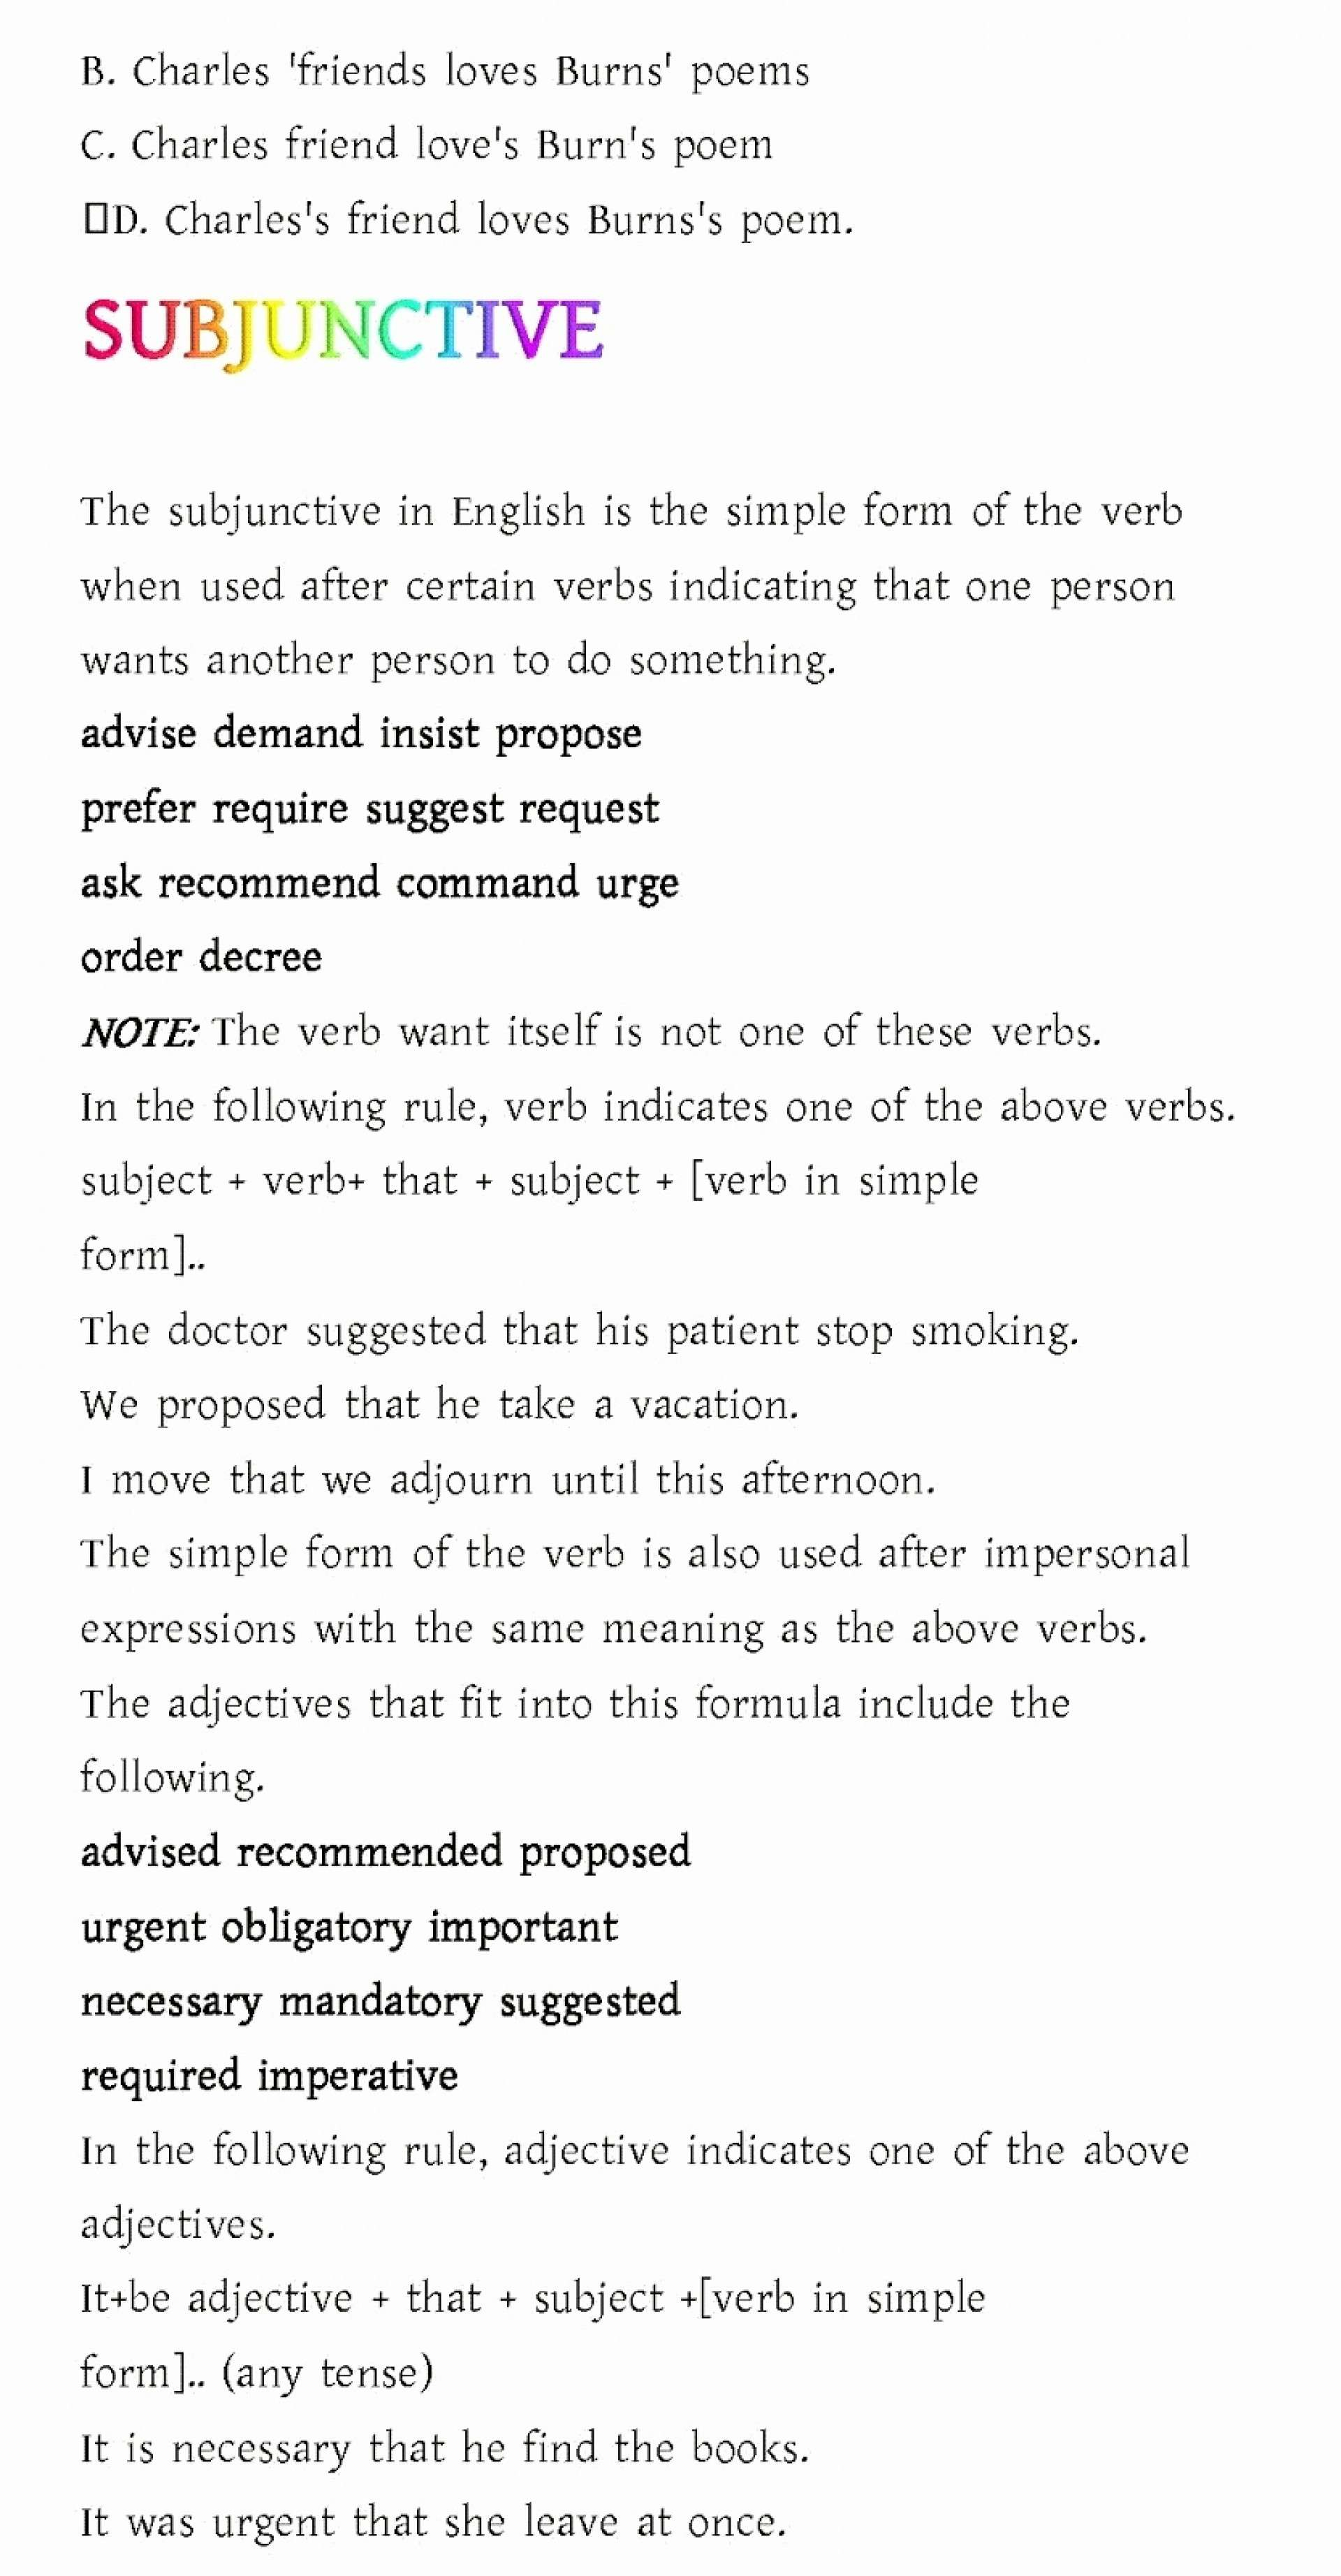 Pronoun Antecedent Agreement Worksheets Pronouns And Antecedents Worksheets Worksheet Idea Template